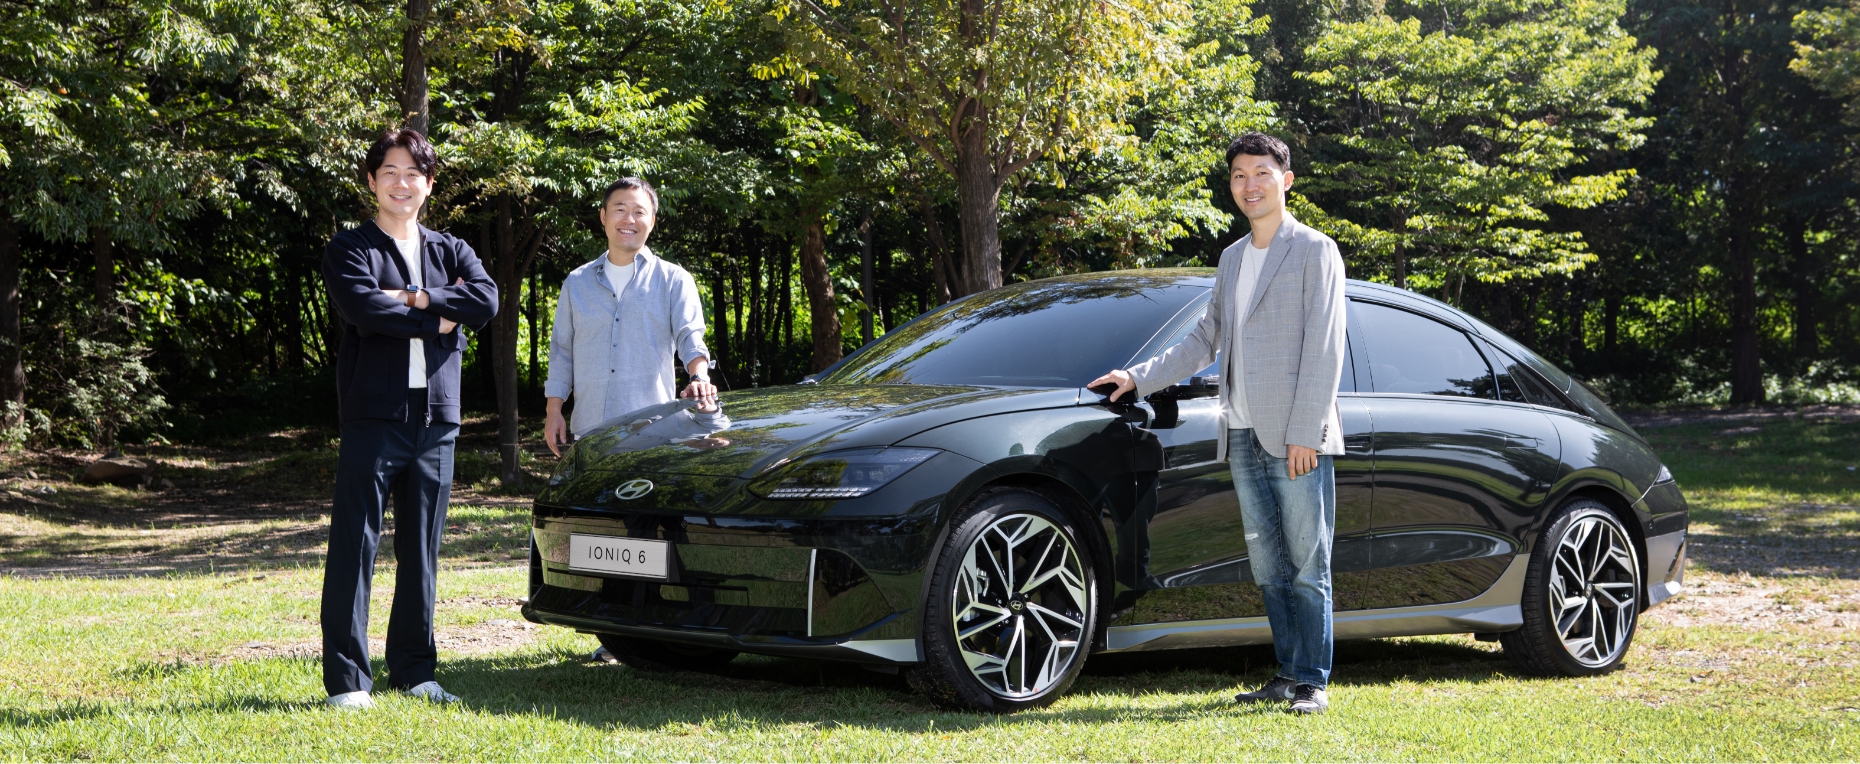 Hyundai Motor Vehicle Researchers are posing